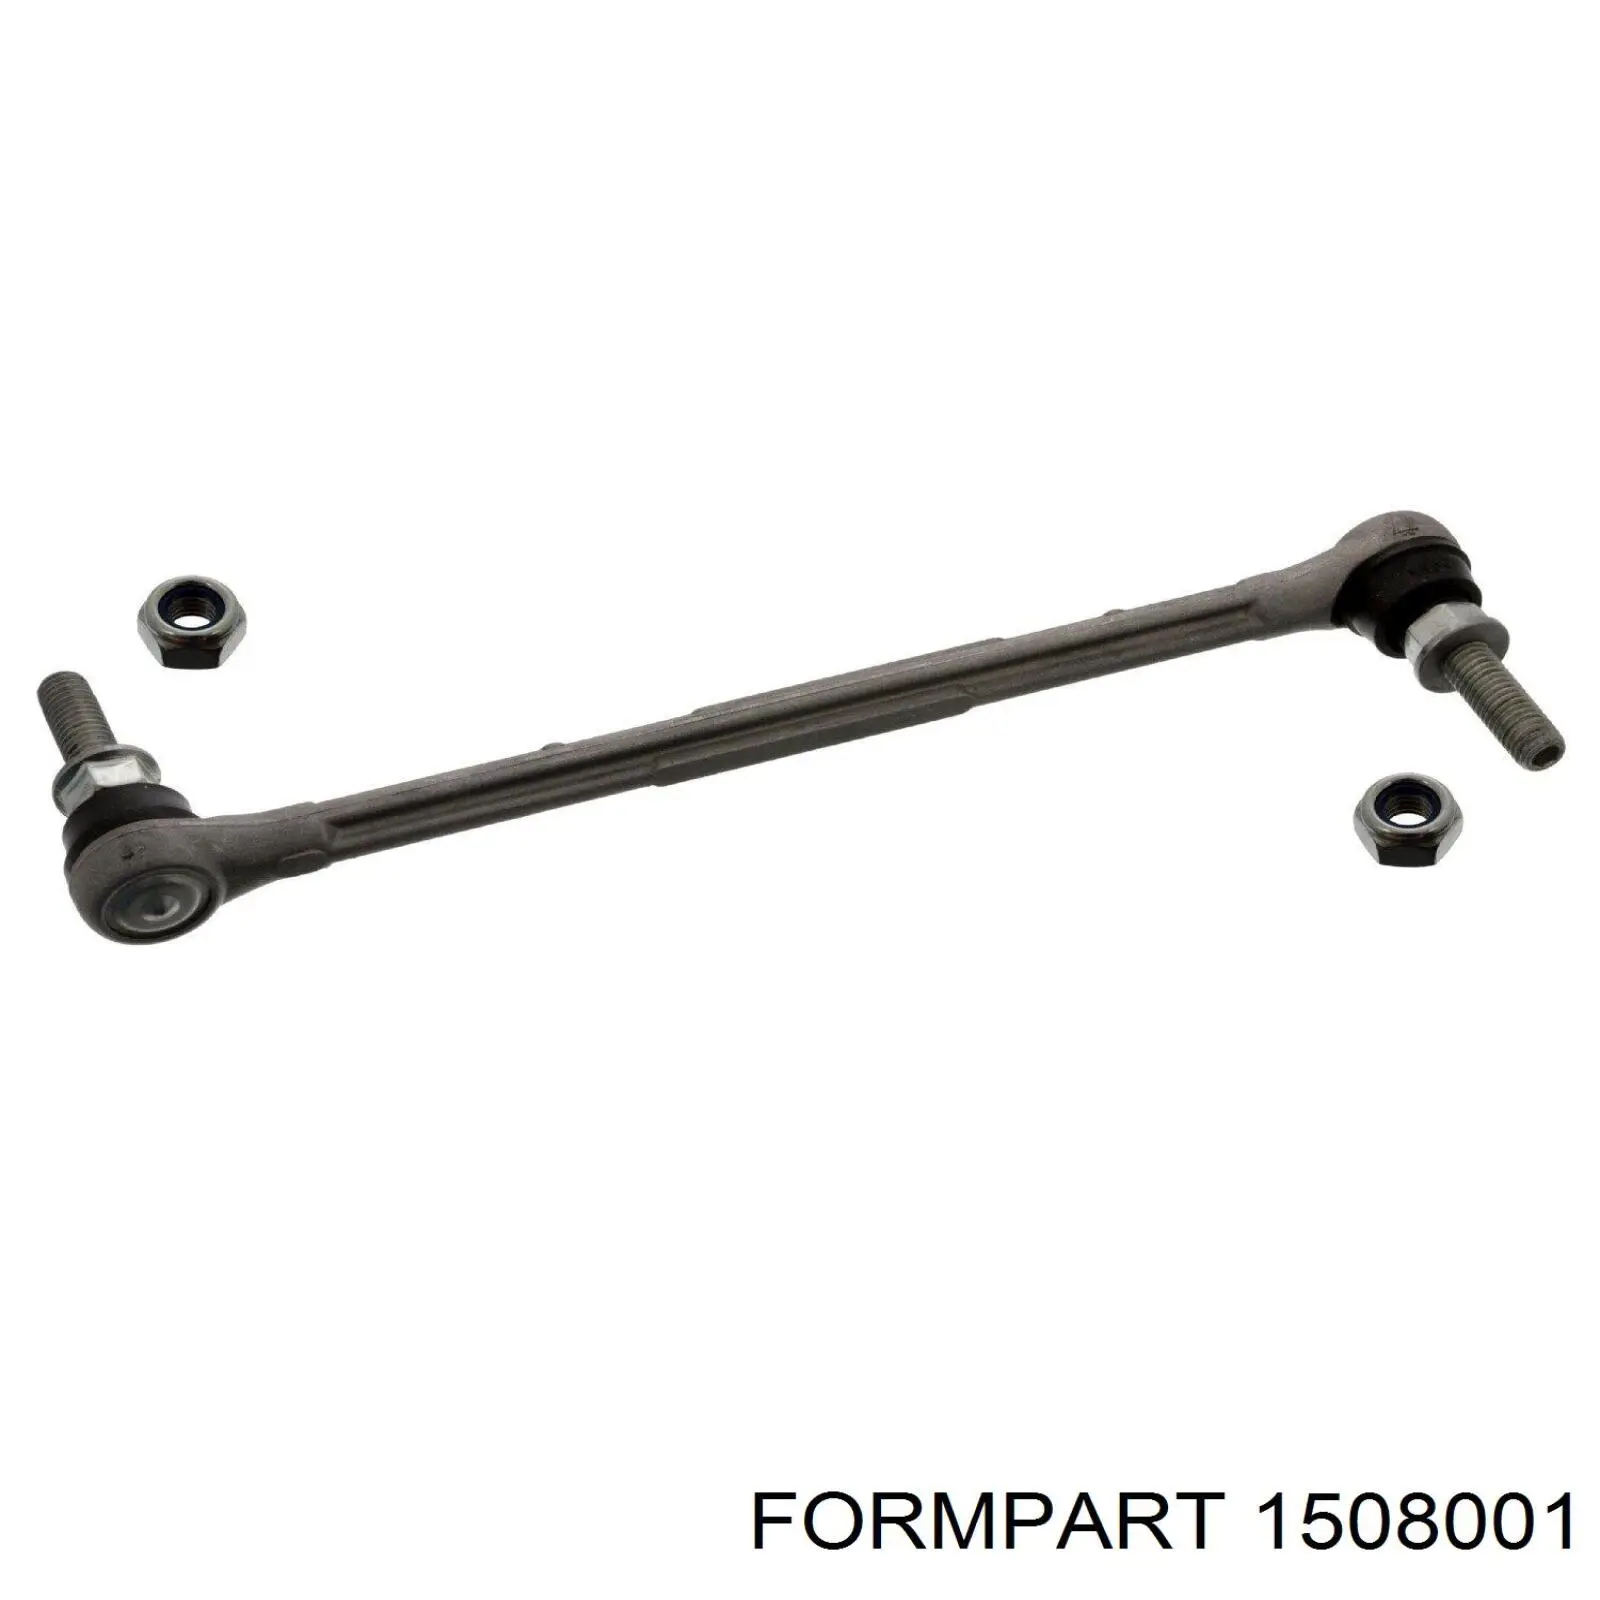 1508001 Formpart/Otoform soporte de barra estabilizadora delantera